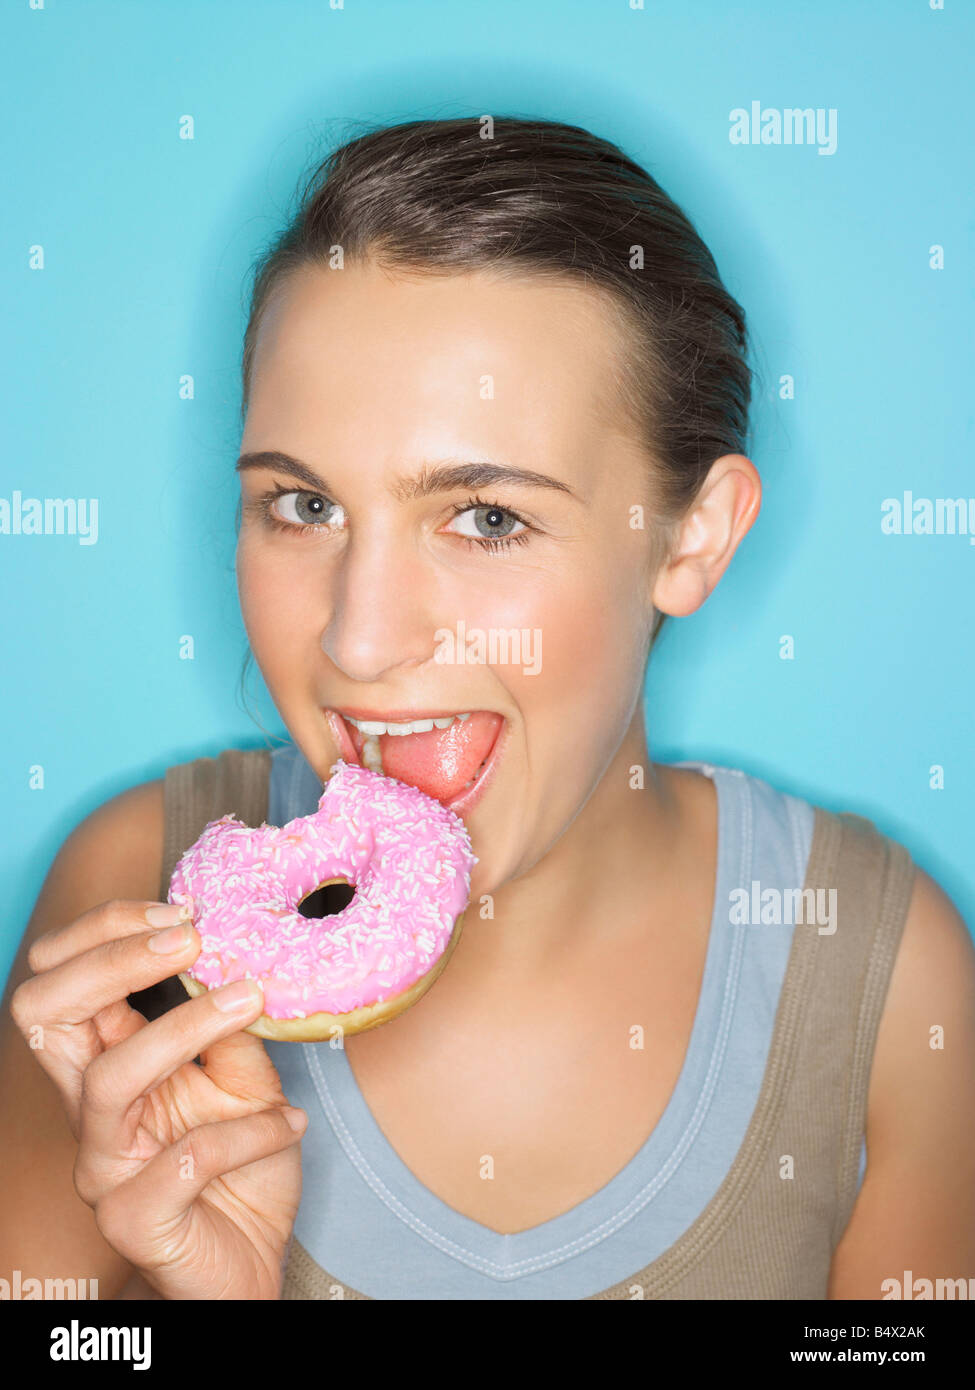 Young woman eating doughnut Stock Photo